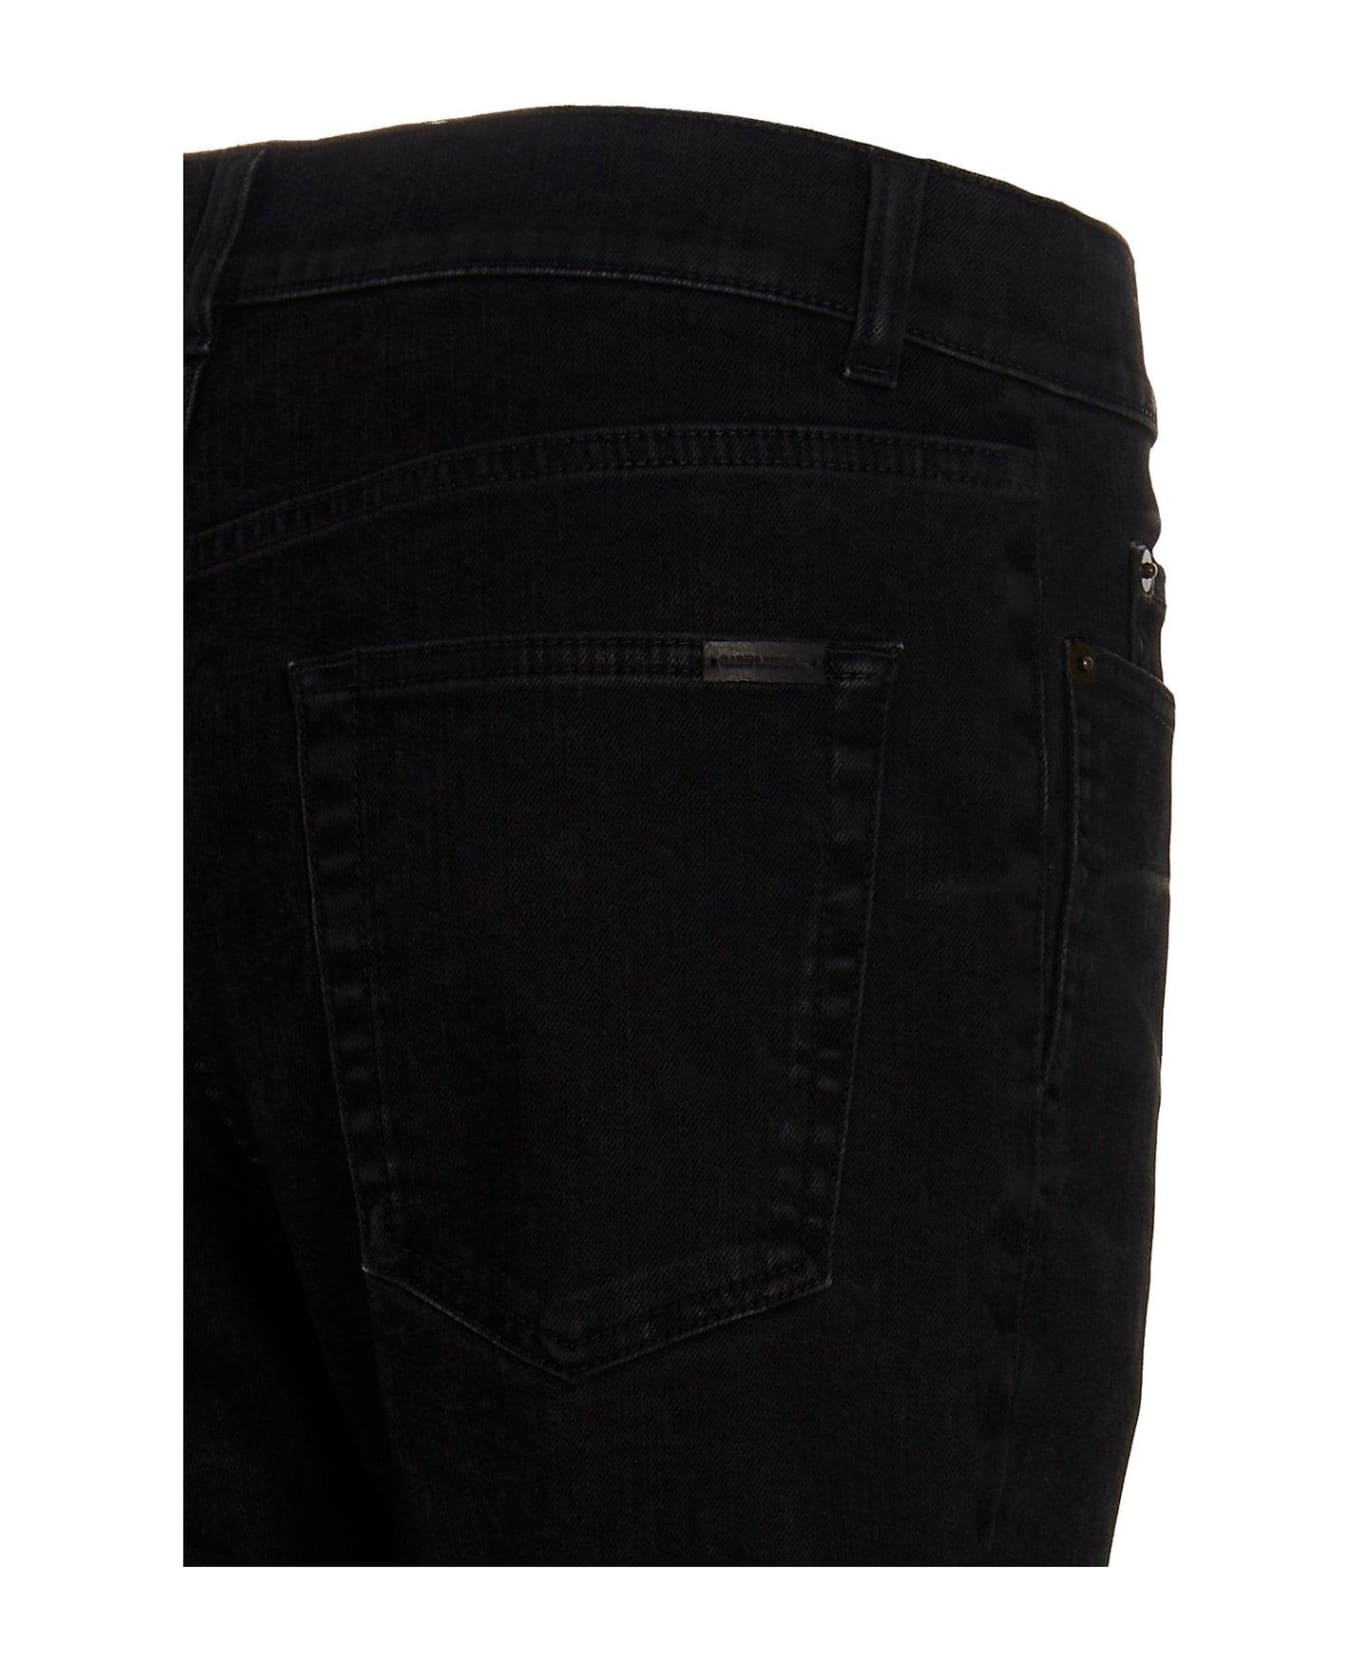 Saint Laurent Valdmir Skinny Jeans - BLACK